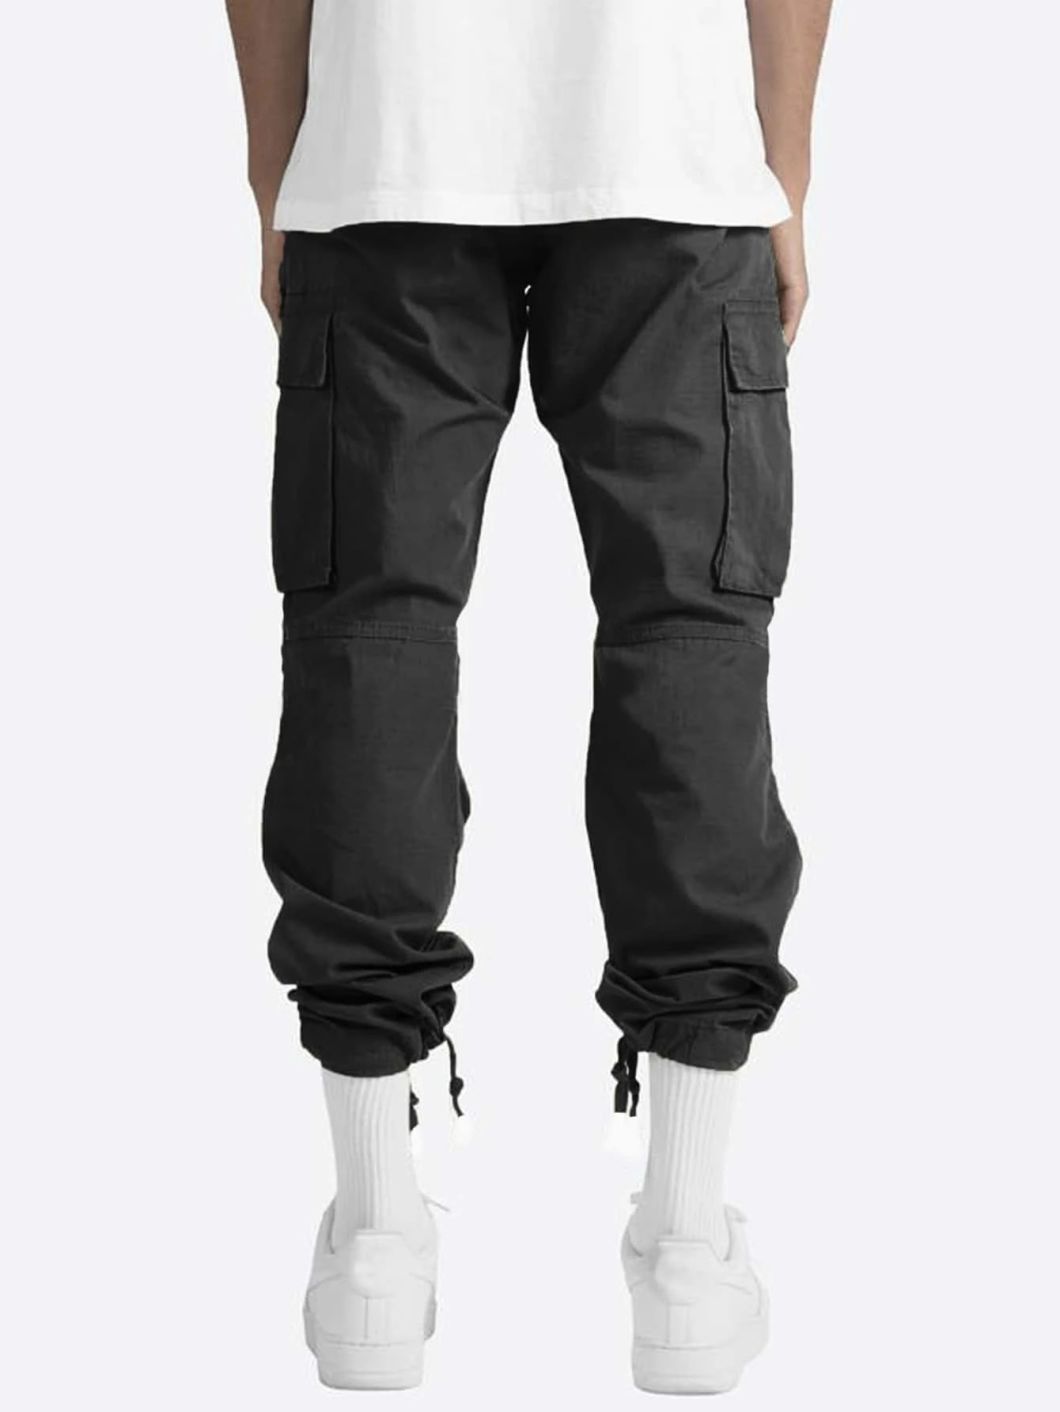 Multi Pocket Cargo Pants for Men Custom Hiking Work Pants